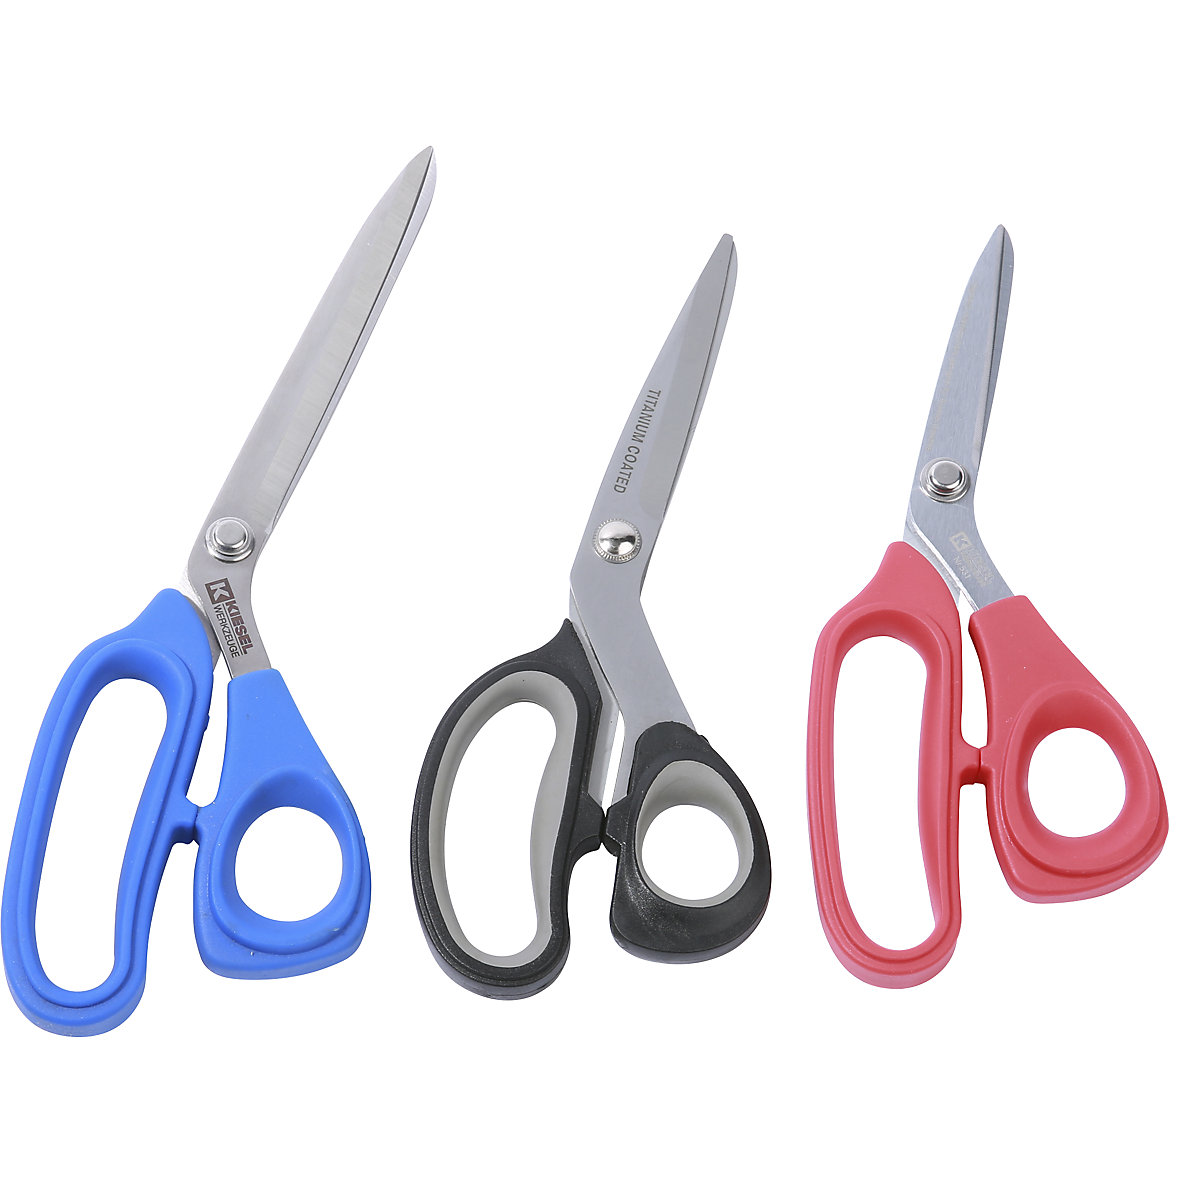 Set of work scissors